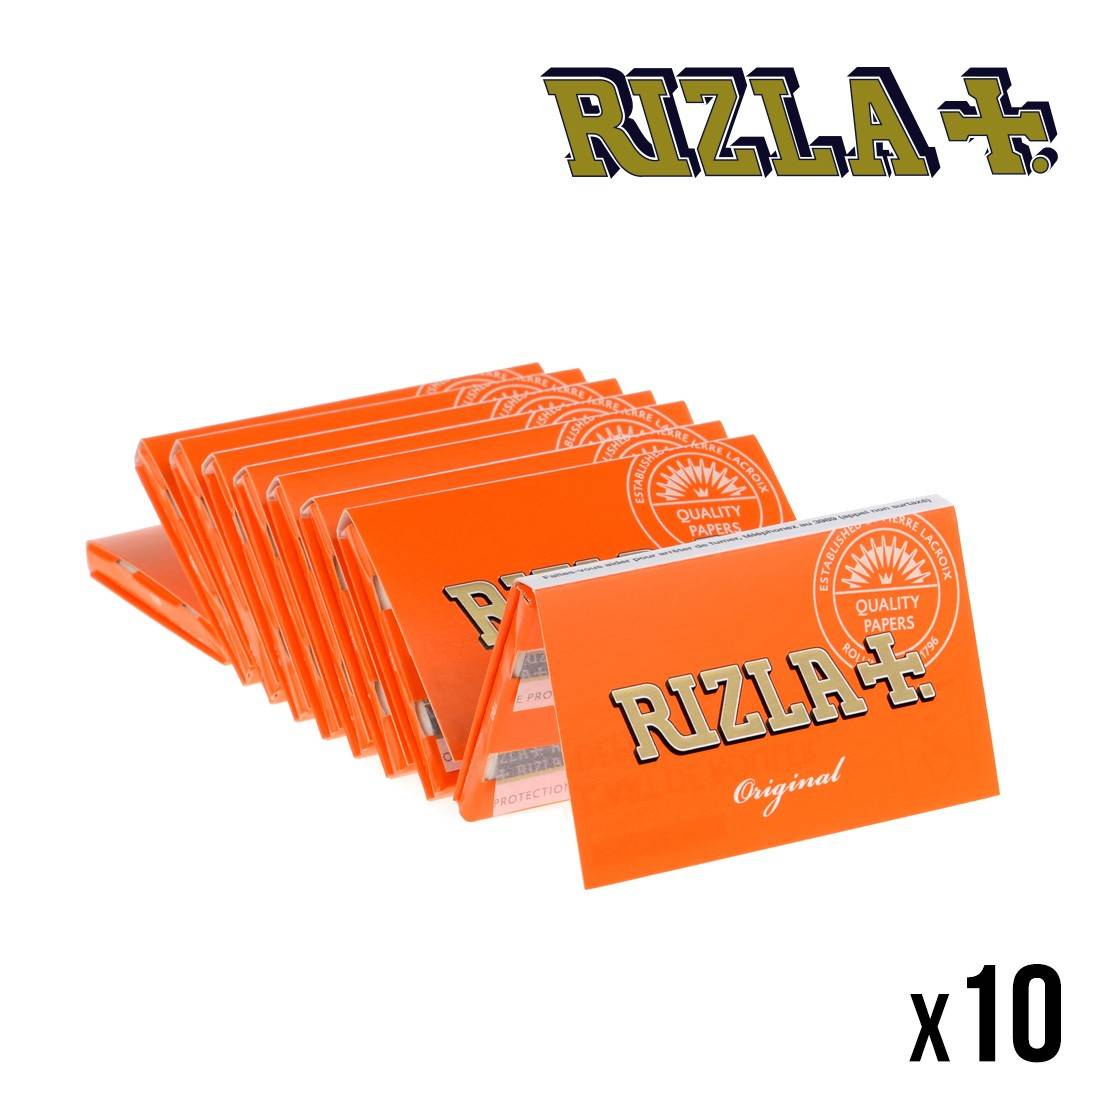 Filtres Rizla + Regular x10 boites - 12,00€